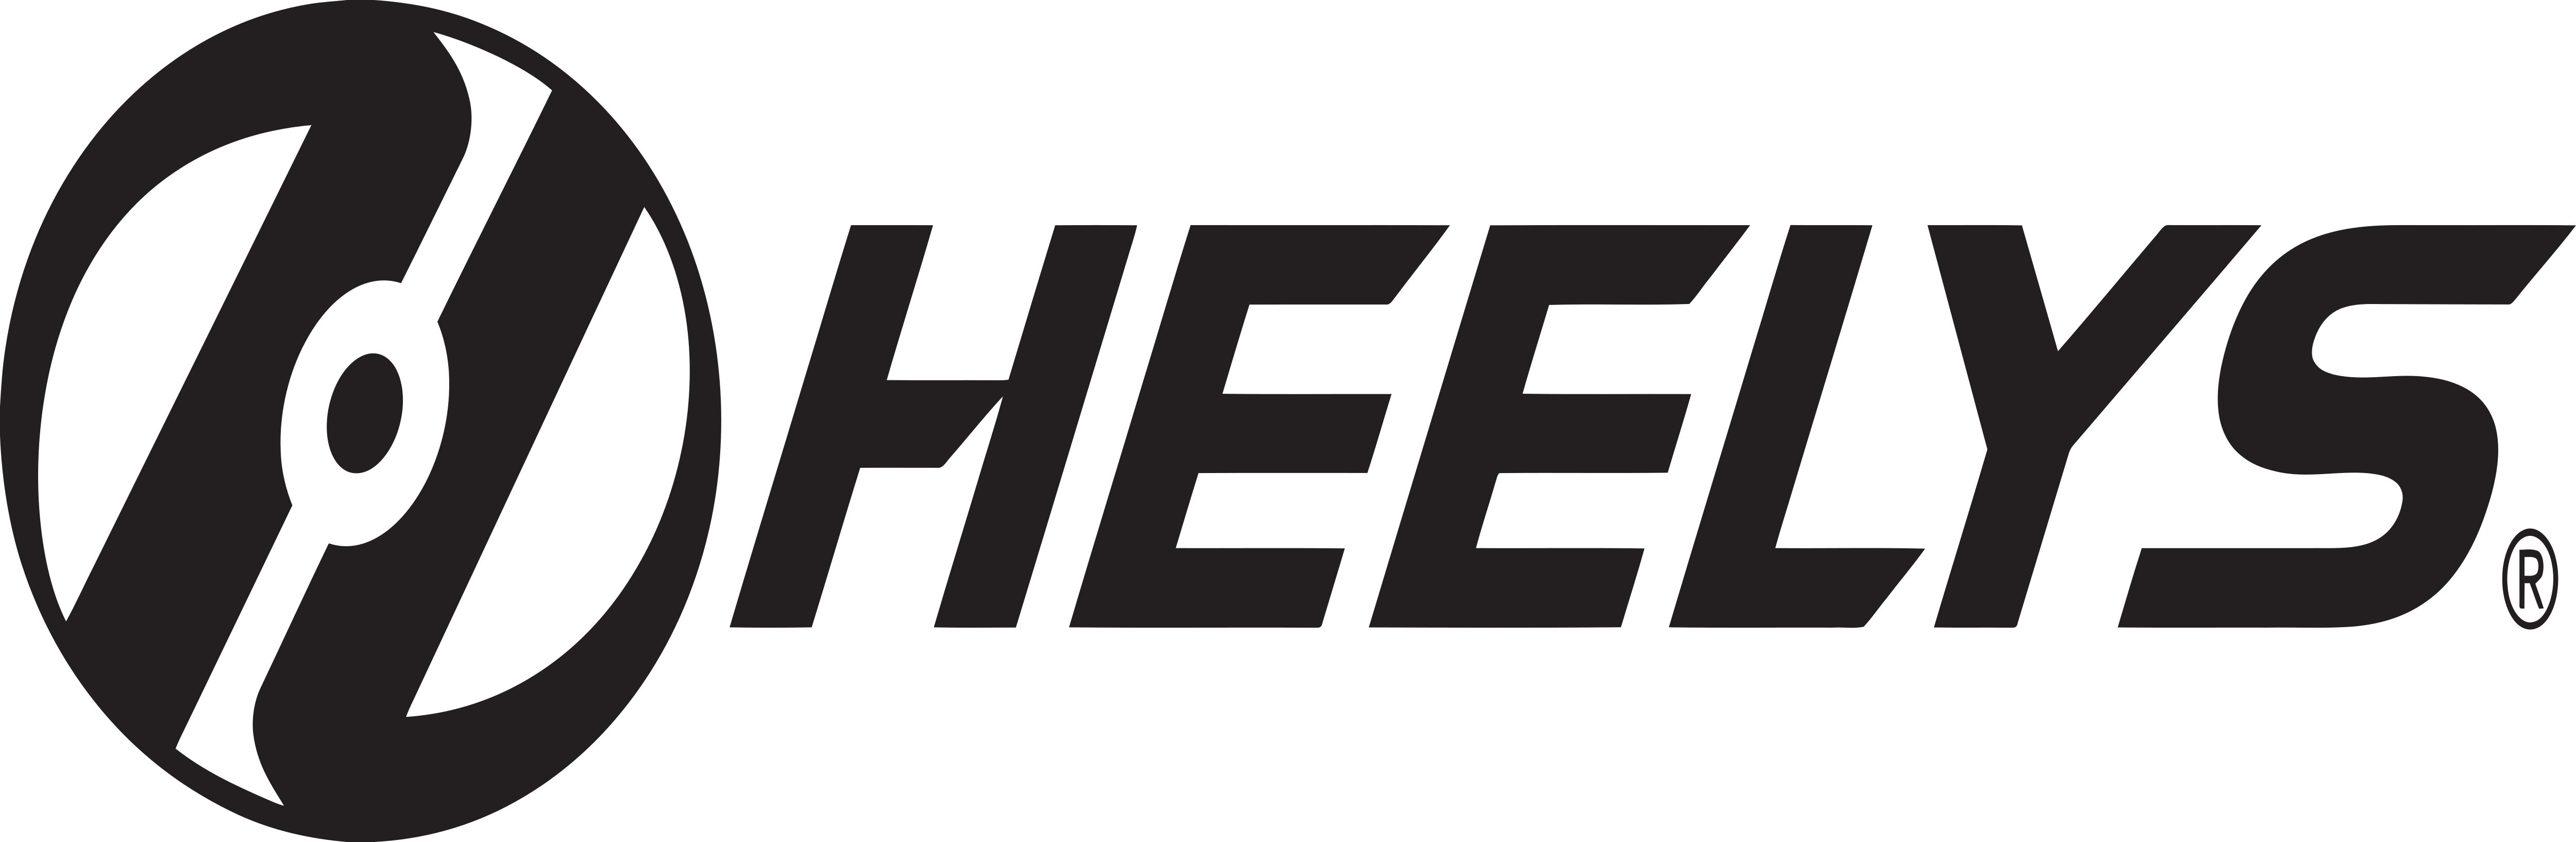 Heelys_Logo_black.png